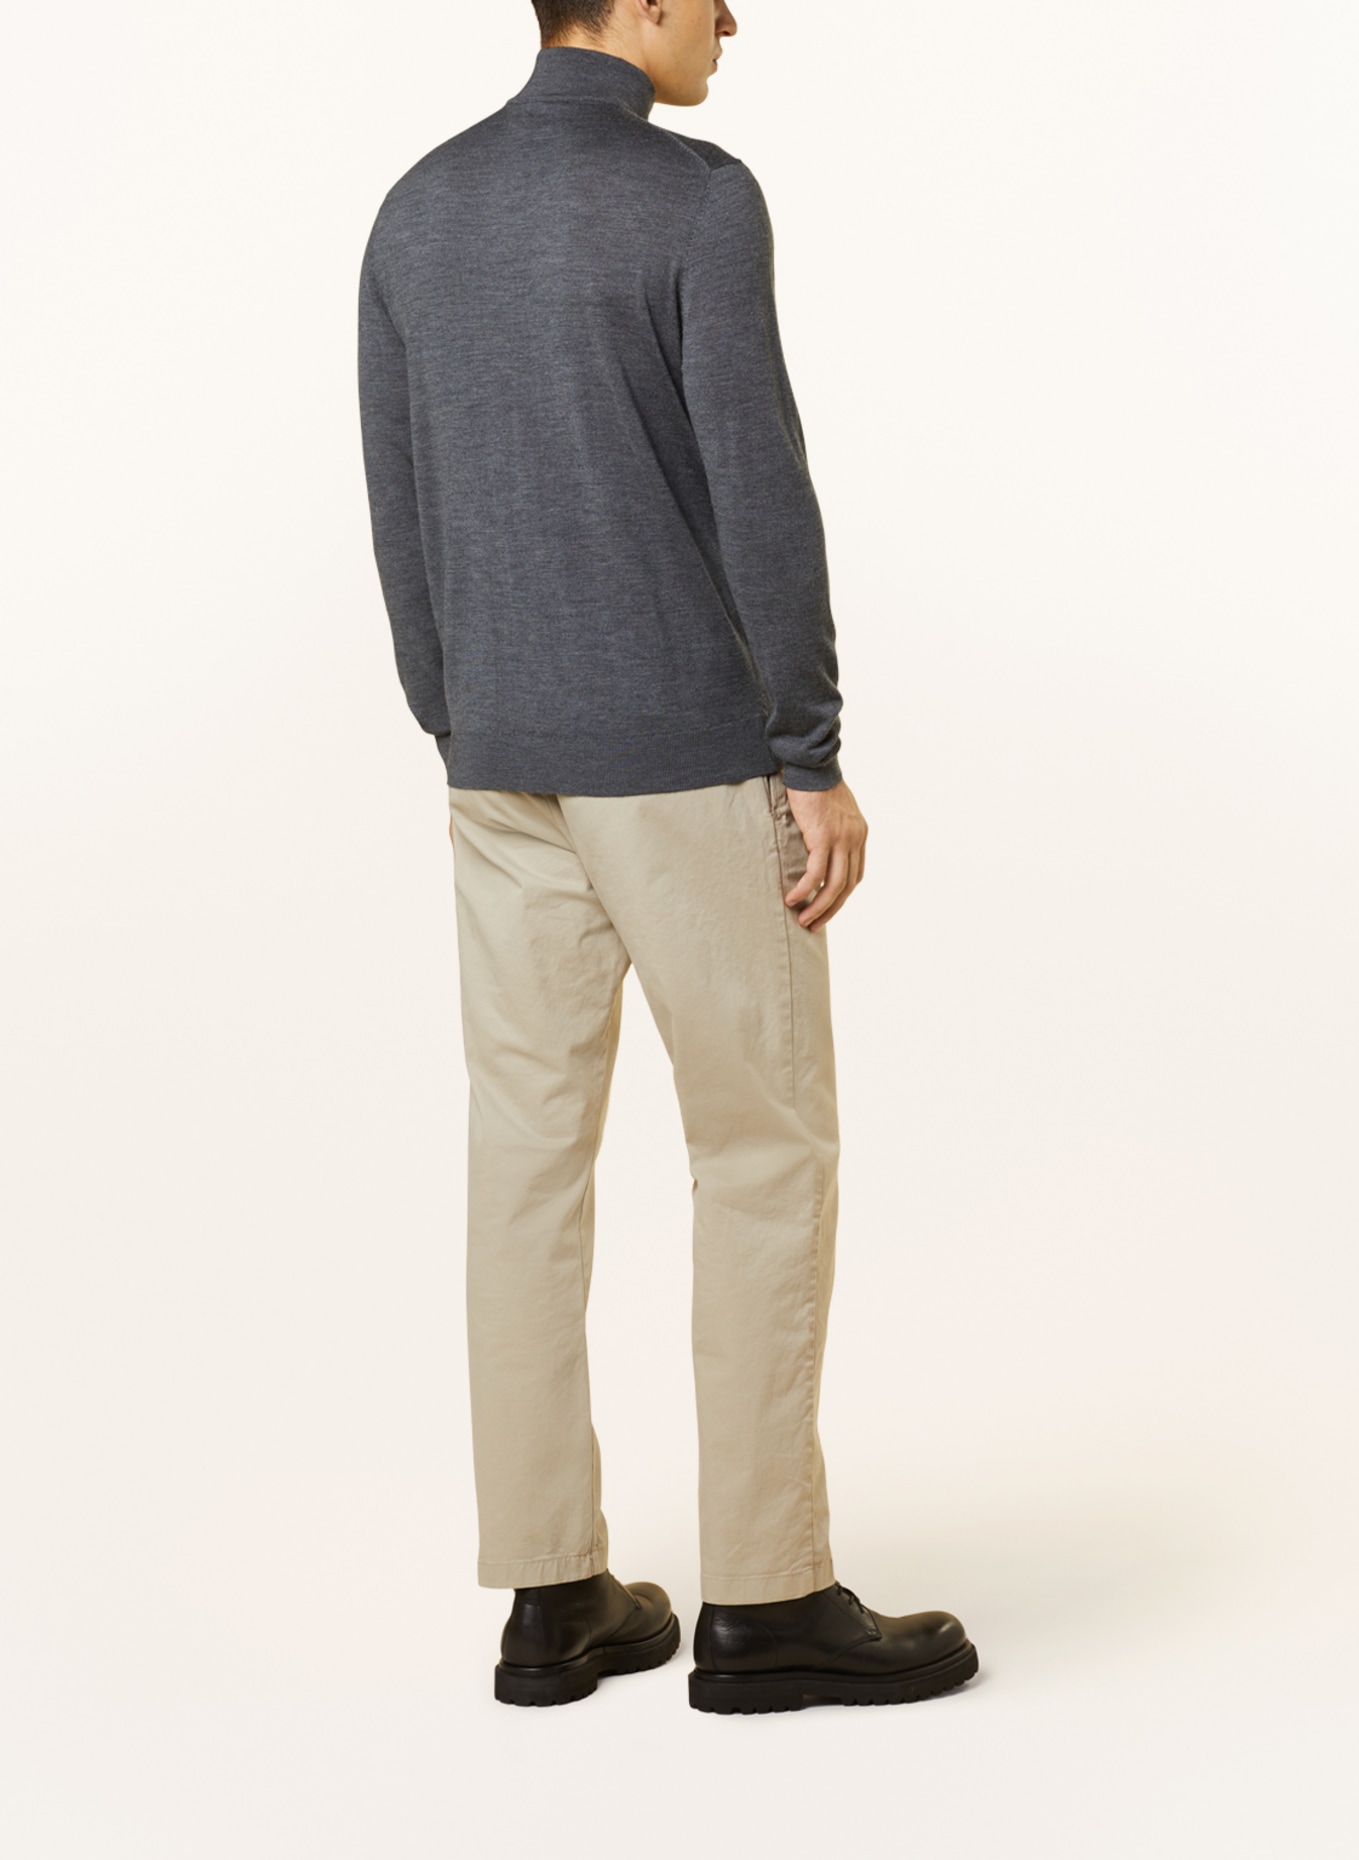 PROFUOMO Half-zip sweater made of merino wool, Color: GRAY (Image 3)